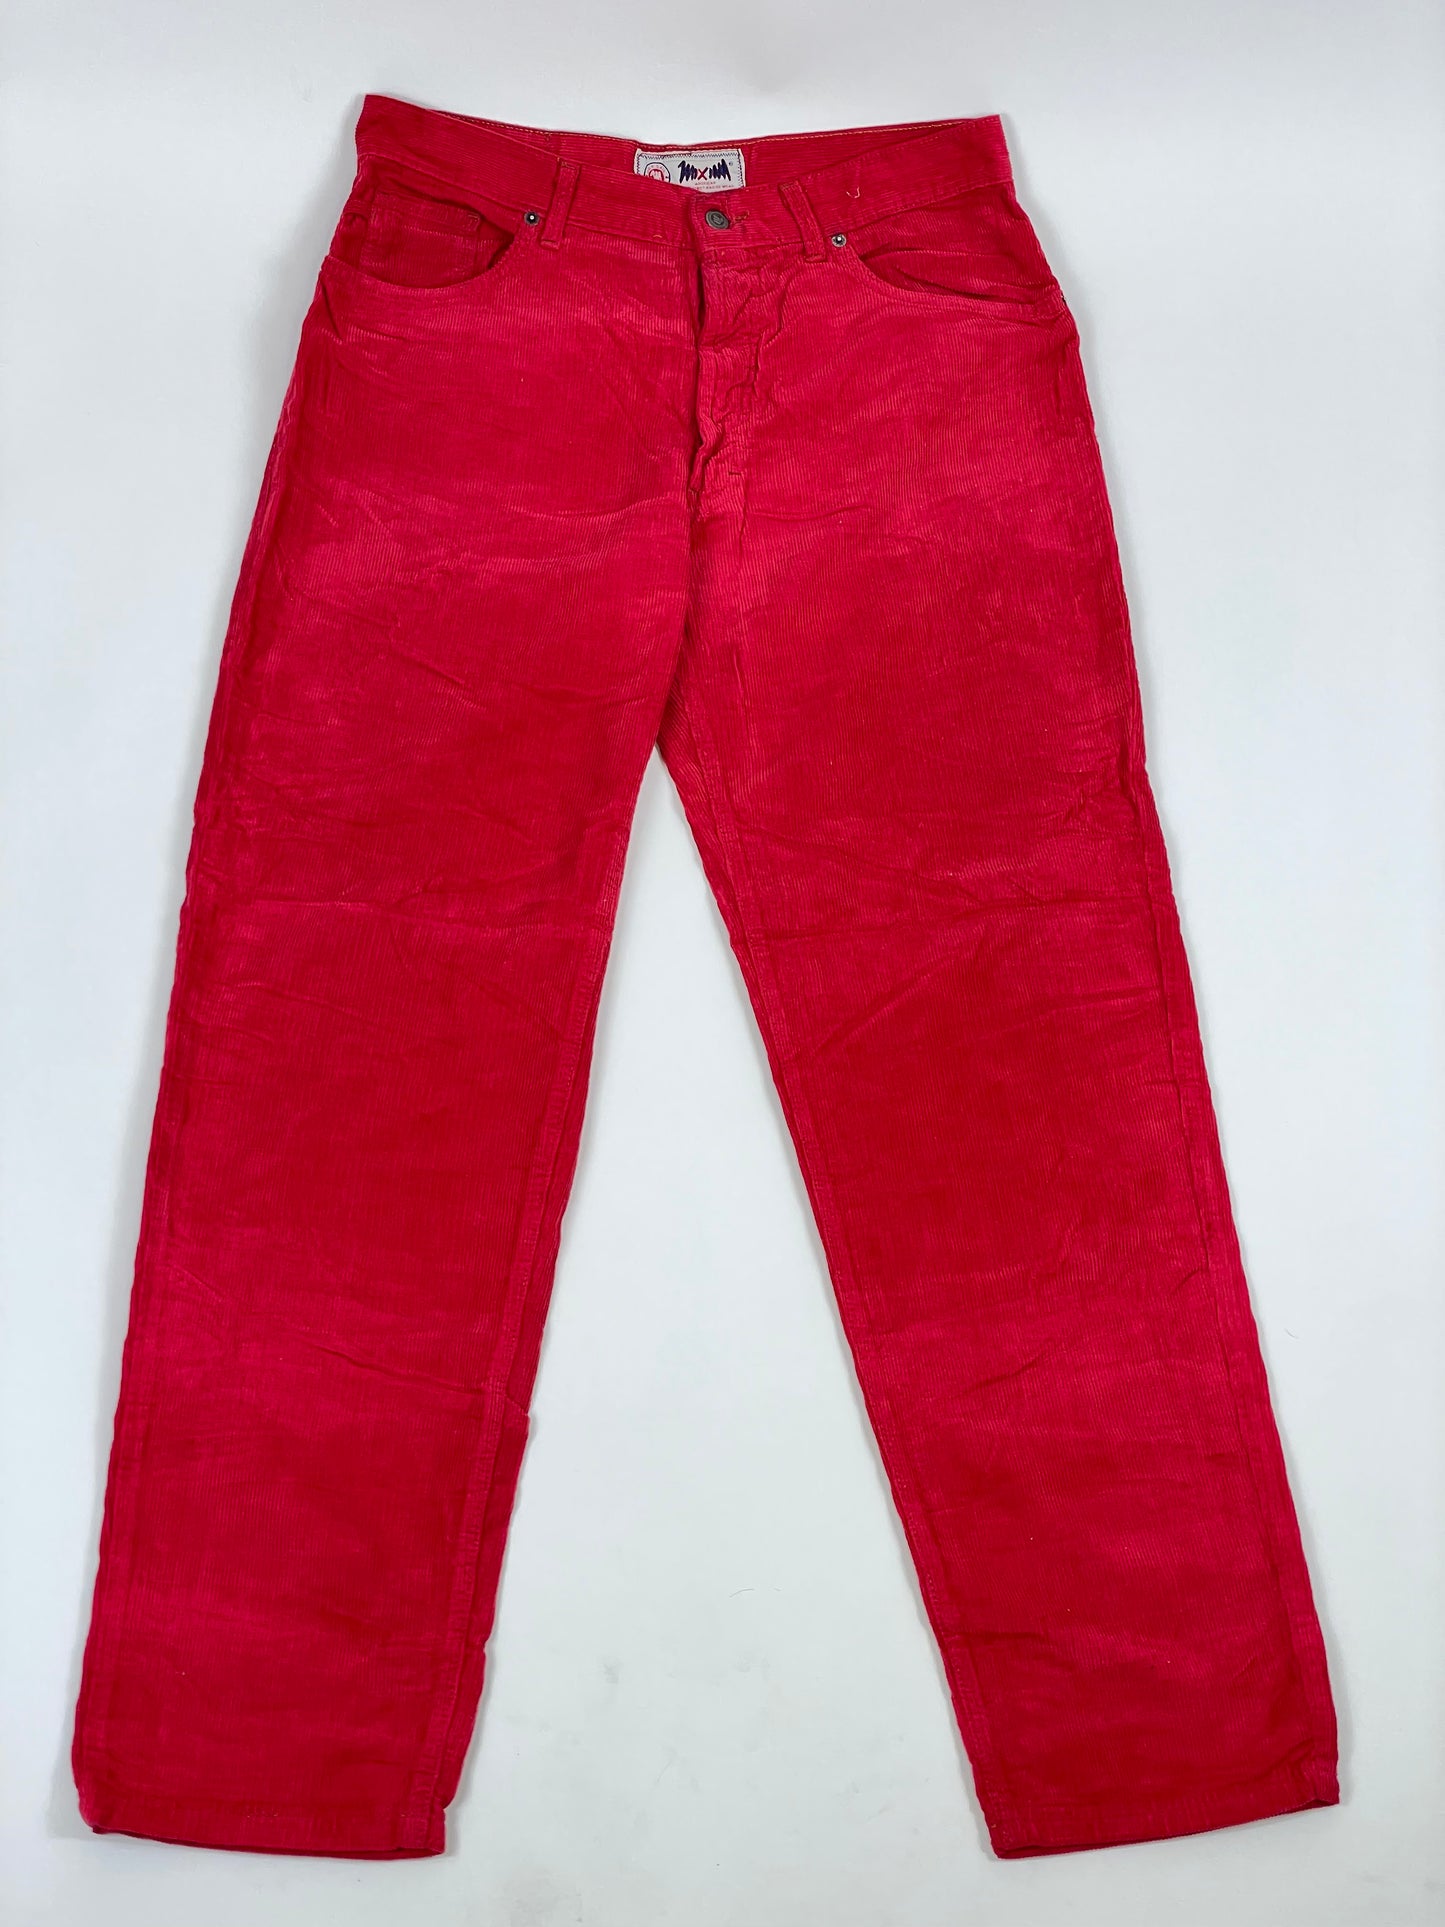 Mixim 1980s trousers